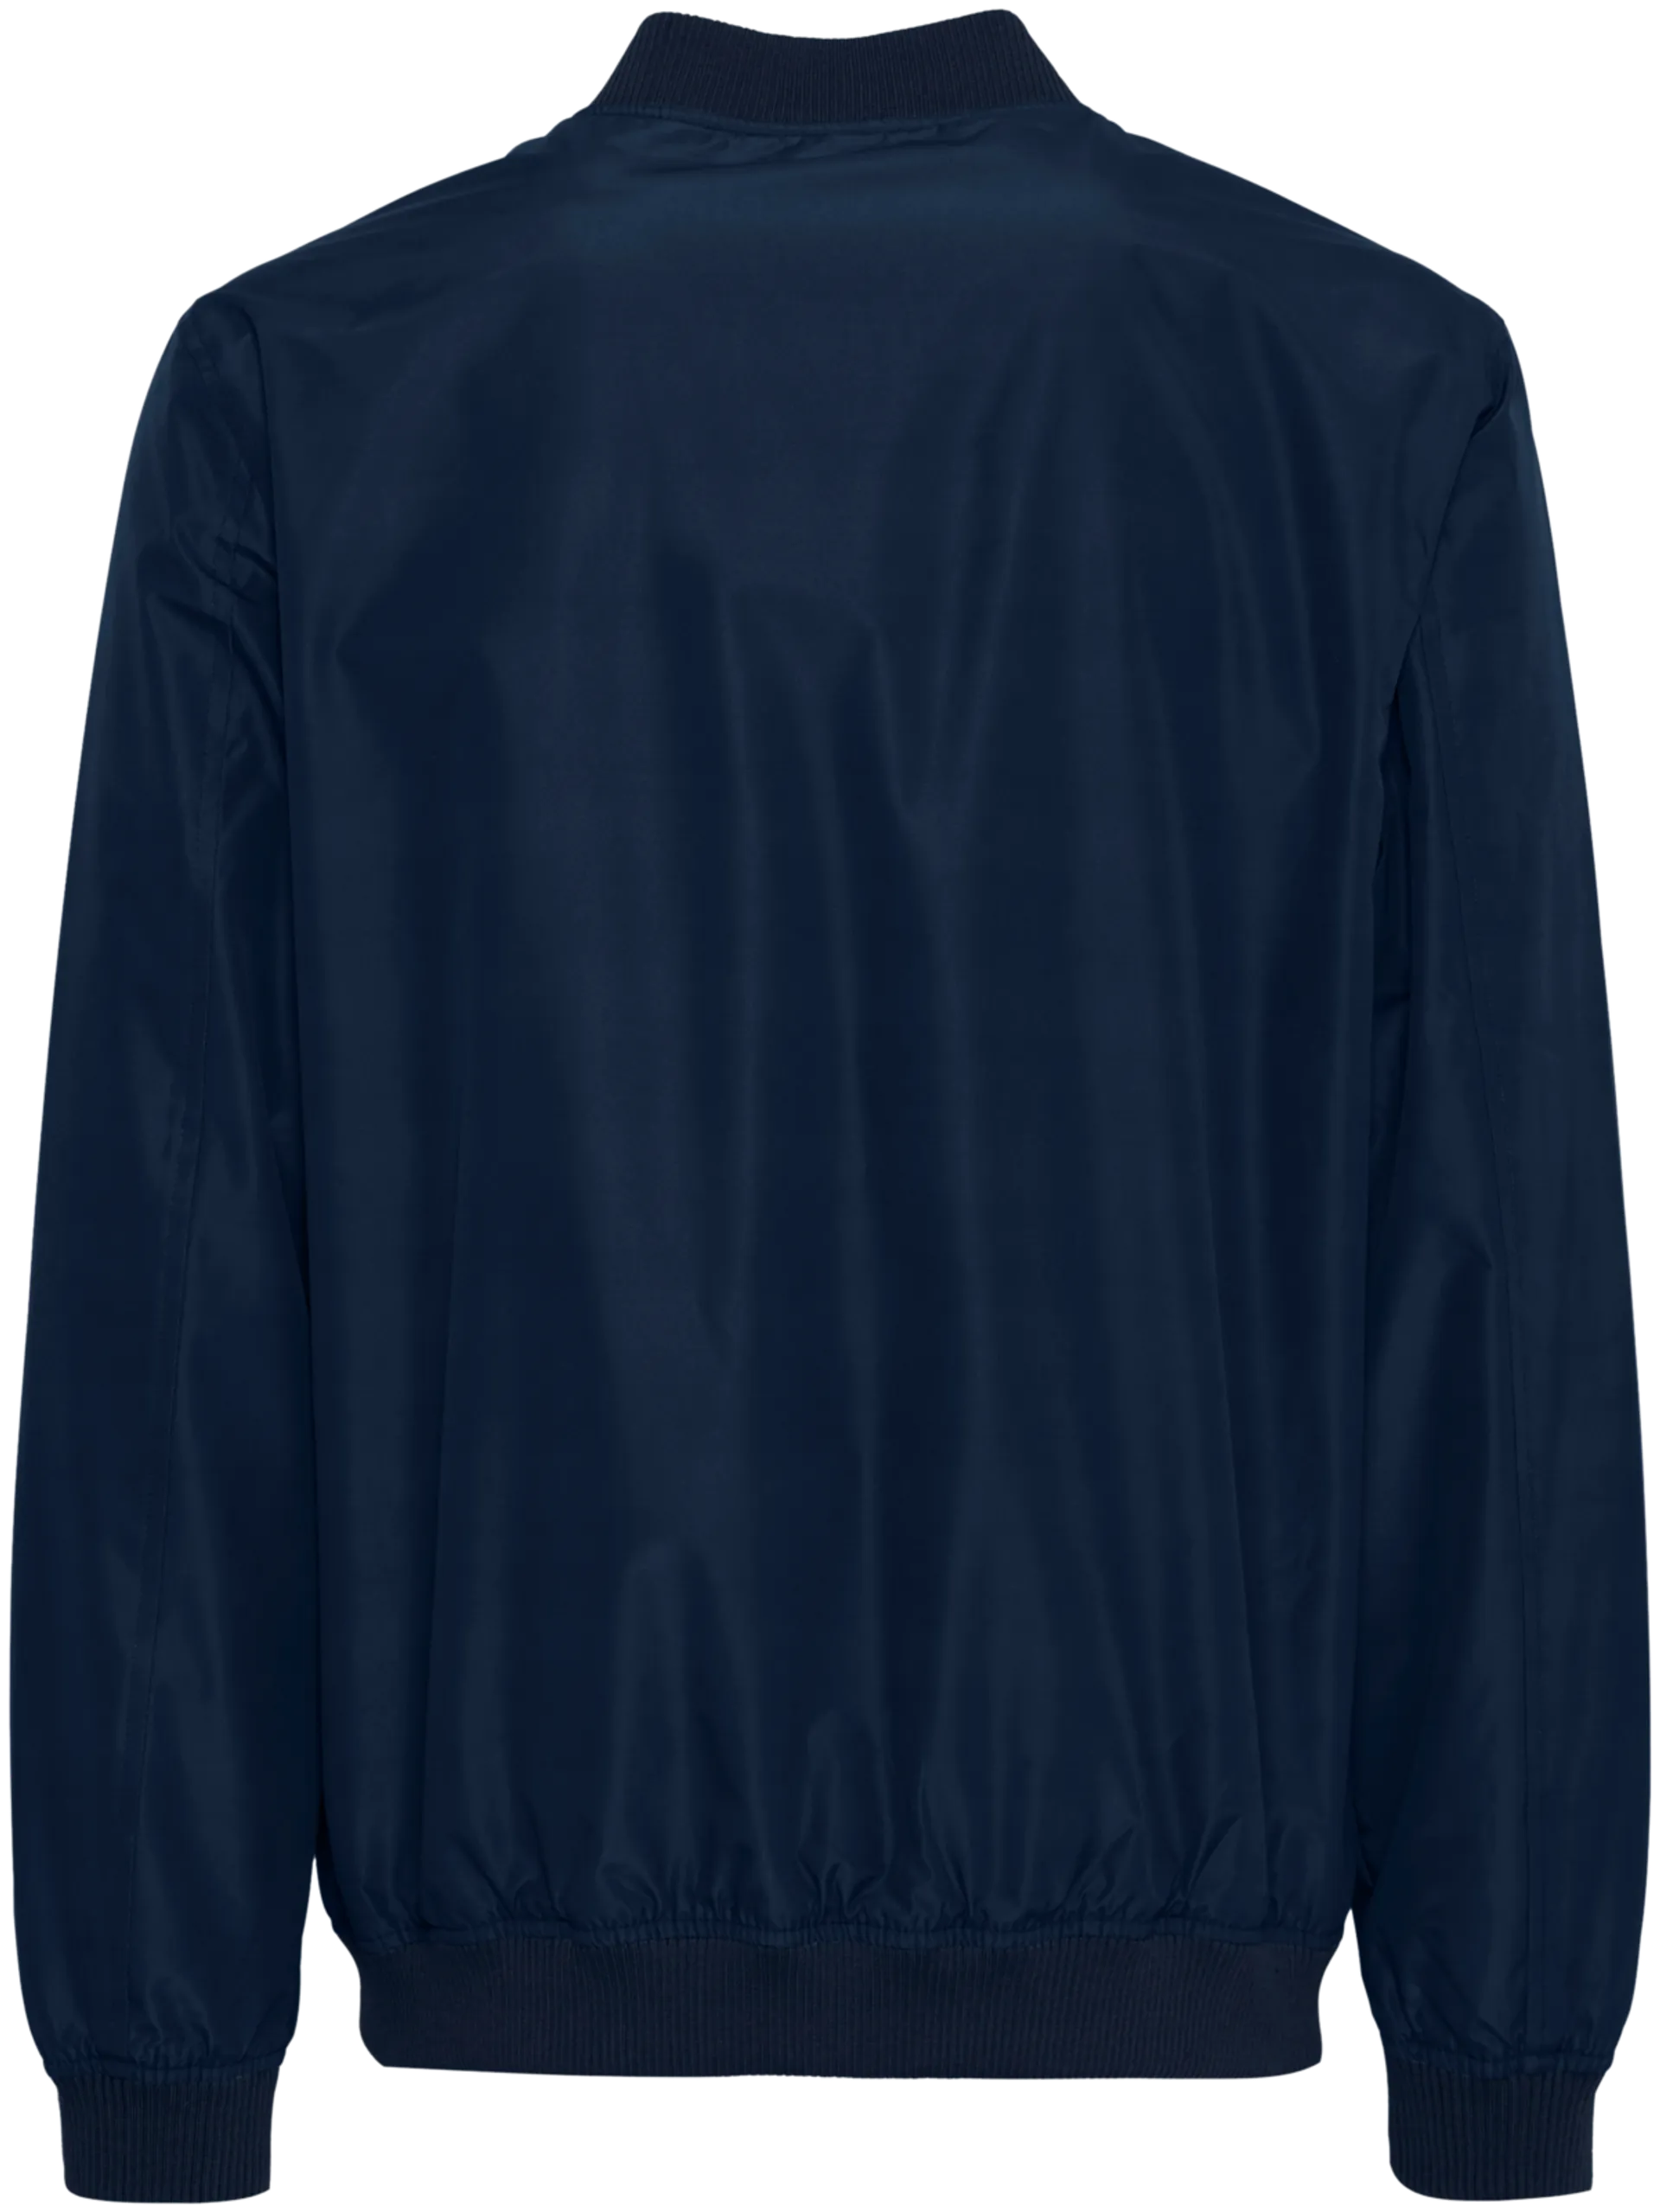 Solid miesten takki SDIdon 21108090 - insignia blue - 2